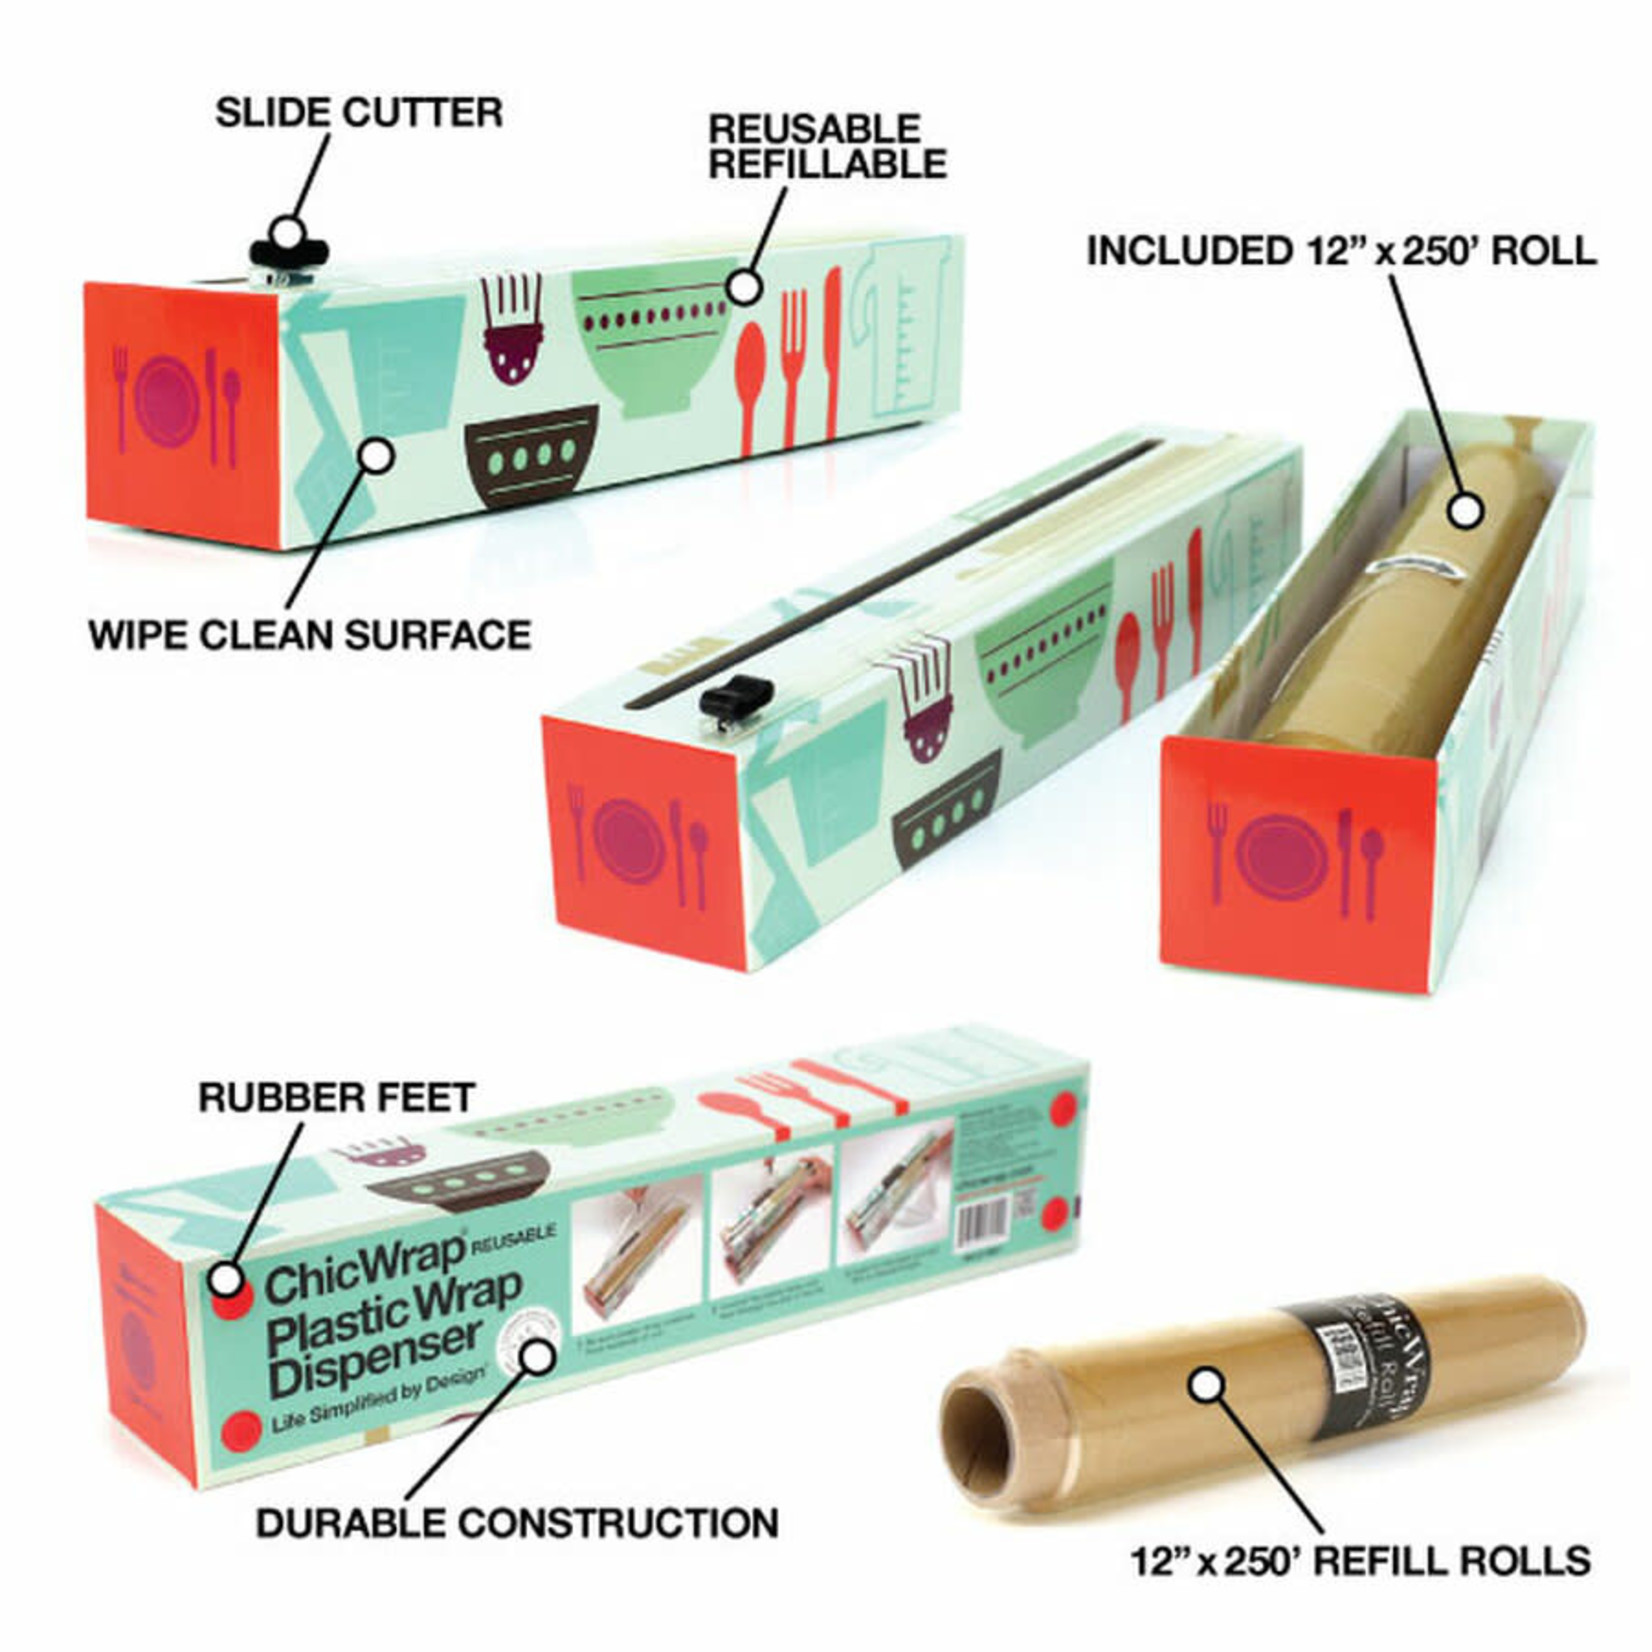 ChicWrap Plastic Wrap & Dispenser - Cook’s Tools